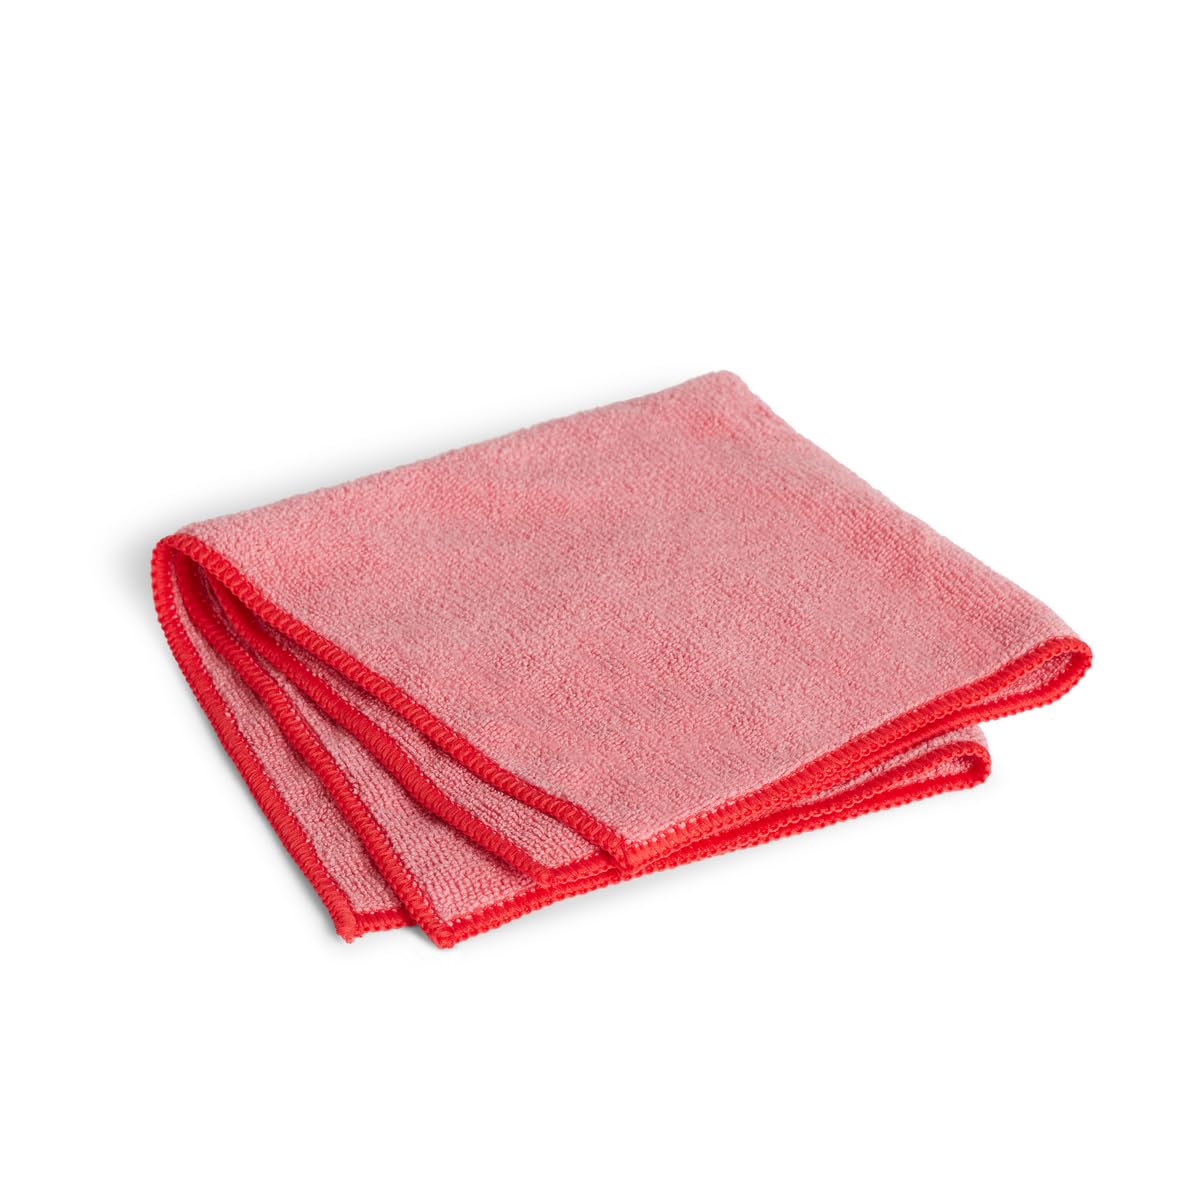 Rubbermaid Microfiber Heavy-Duty Cloth Towels, 16 Pack, 16